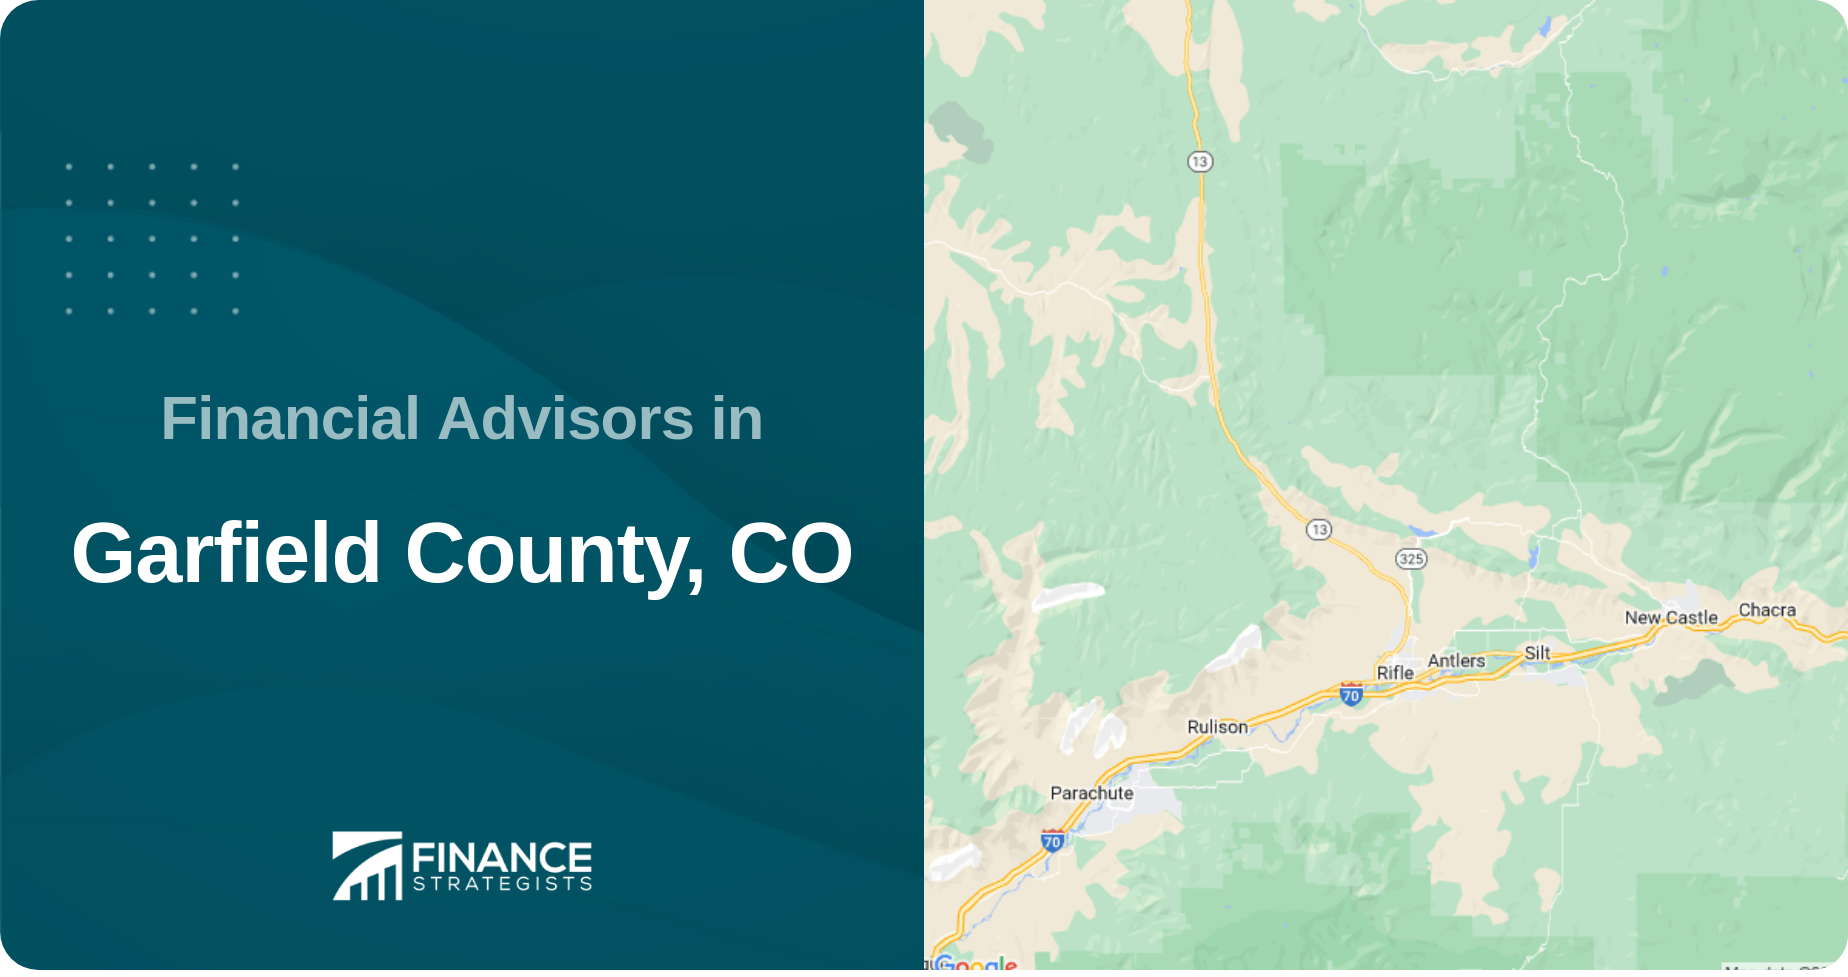 Financial Advisors in Garfield County, CO